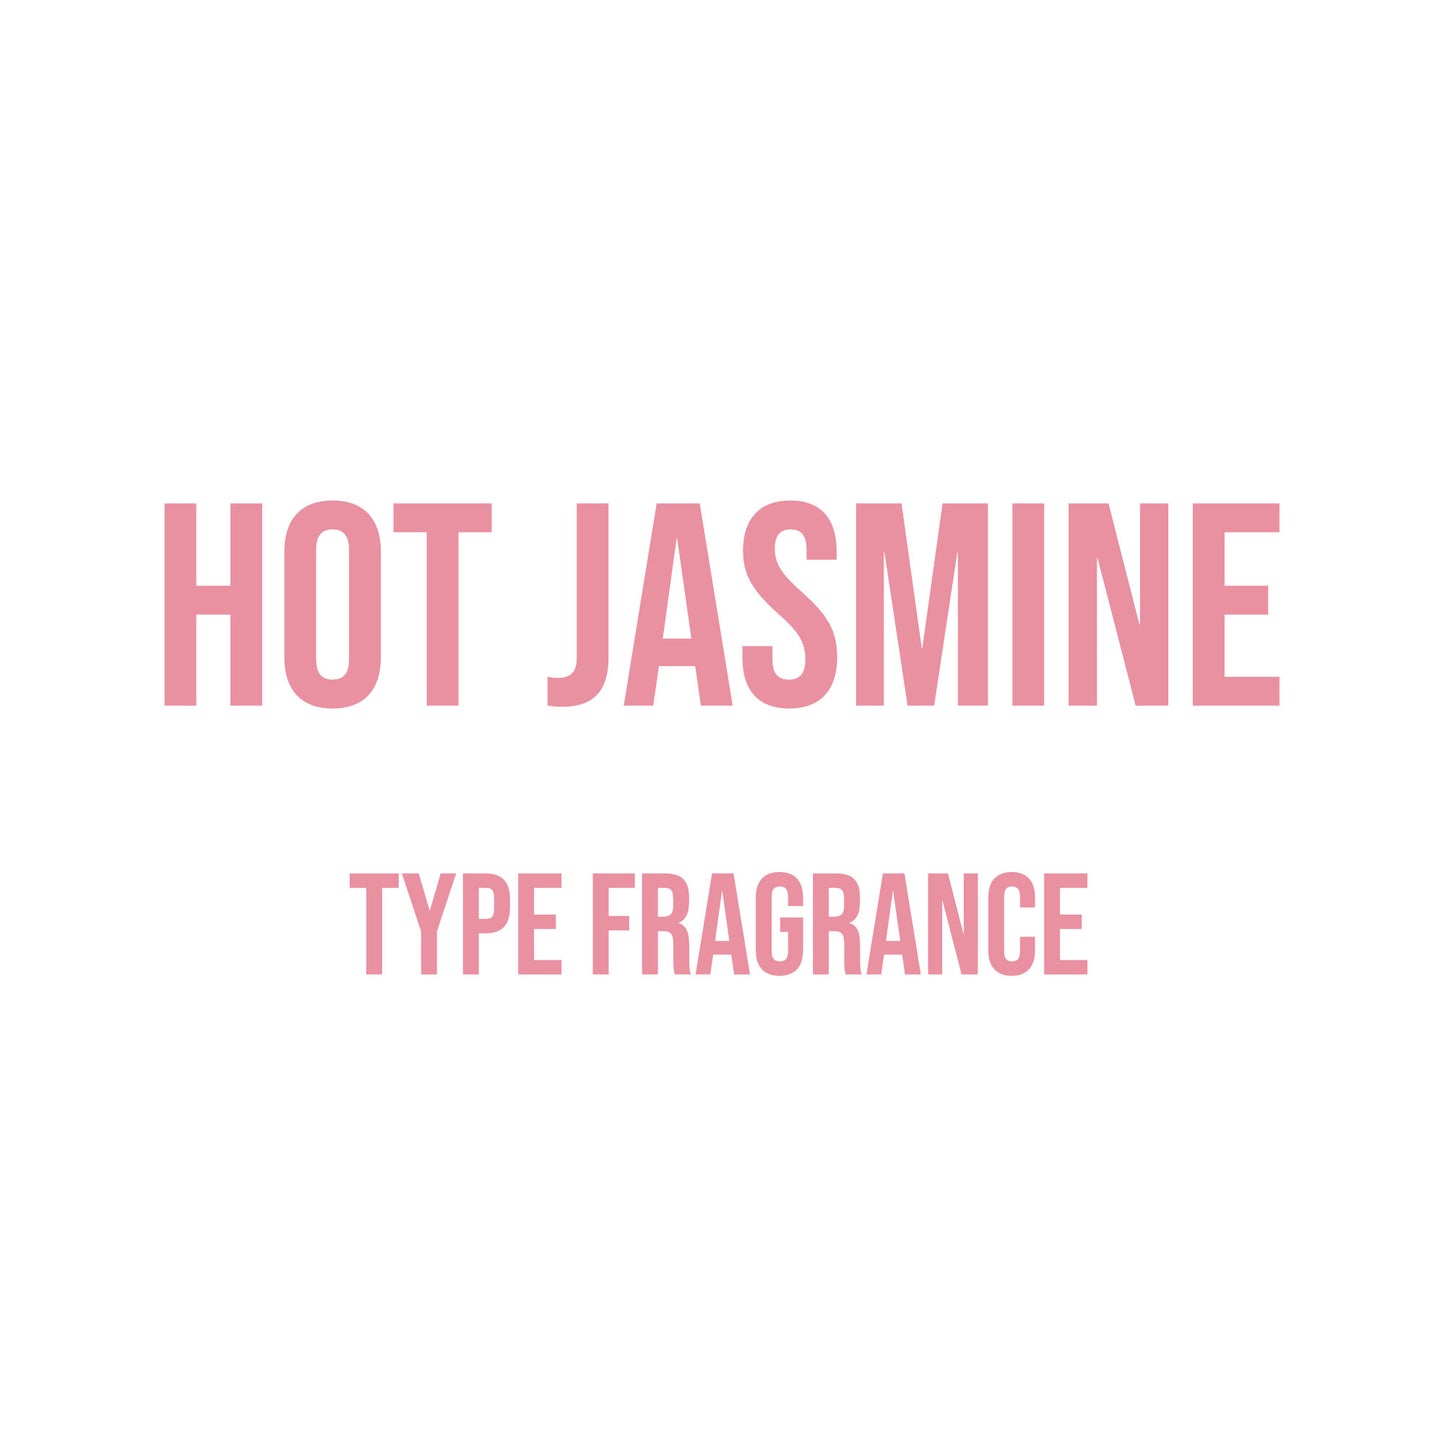 Hot Jasmine Type Fragrance